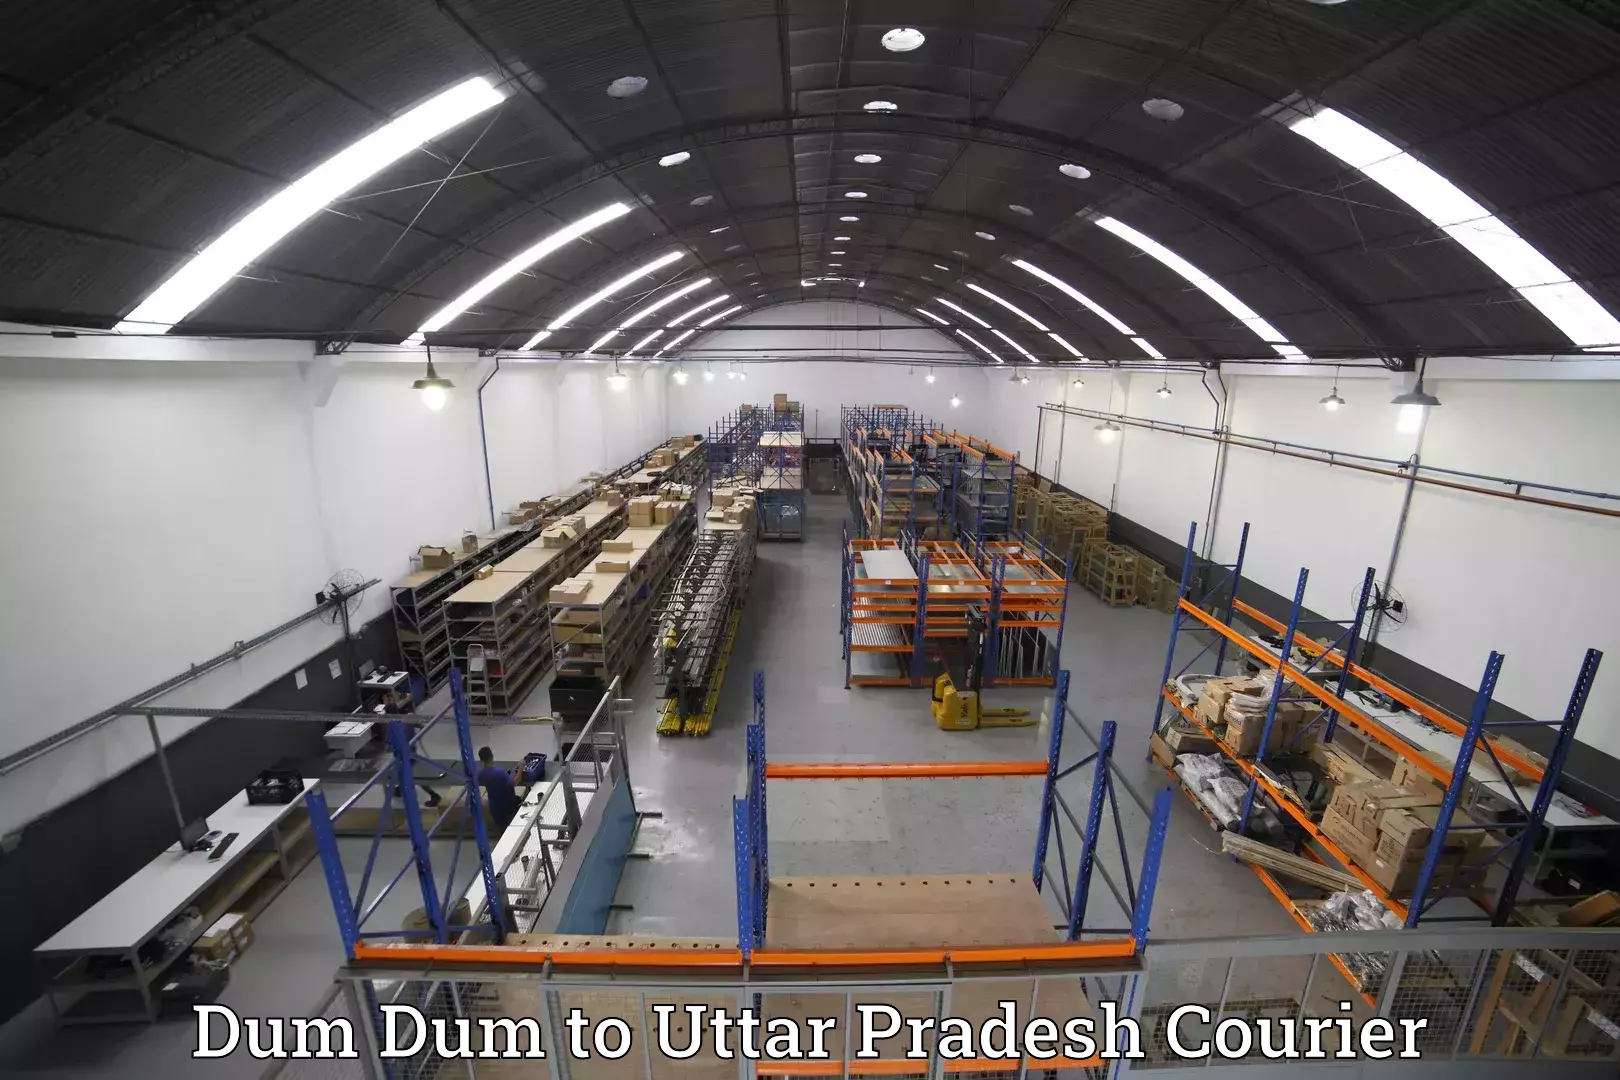 Doorstep luggage collection Dum Dum to Uttar Pradesh